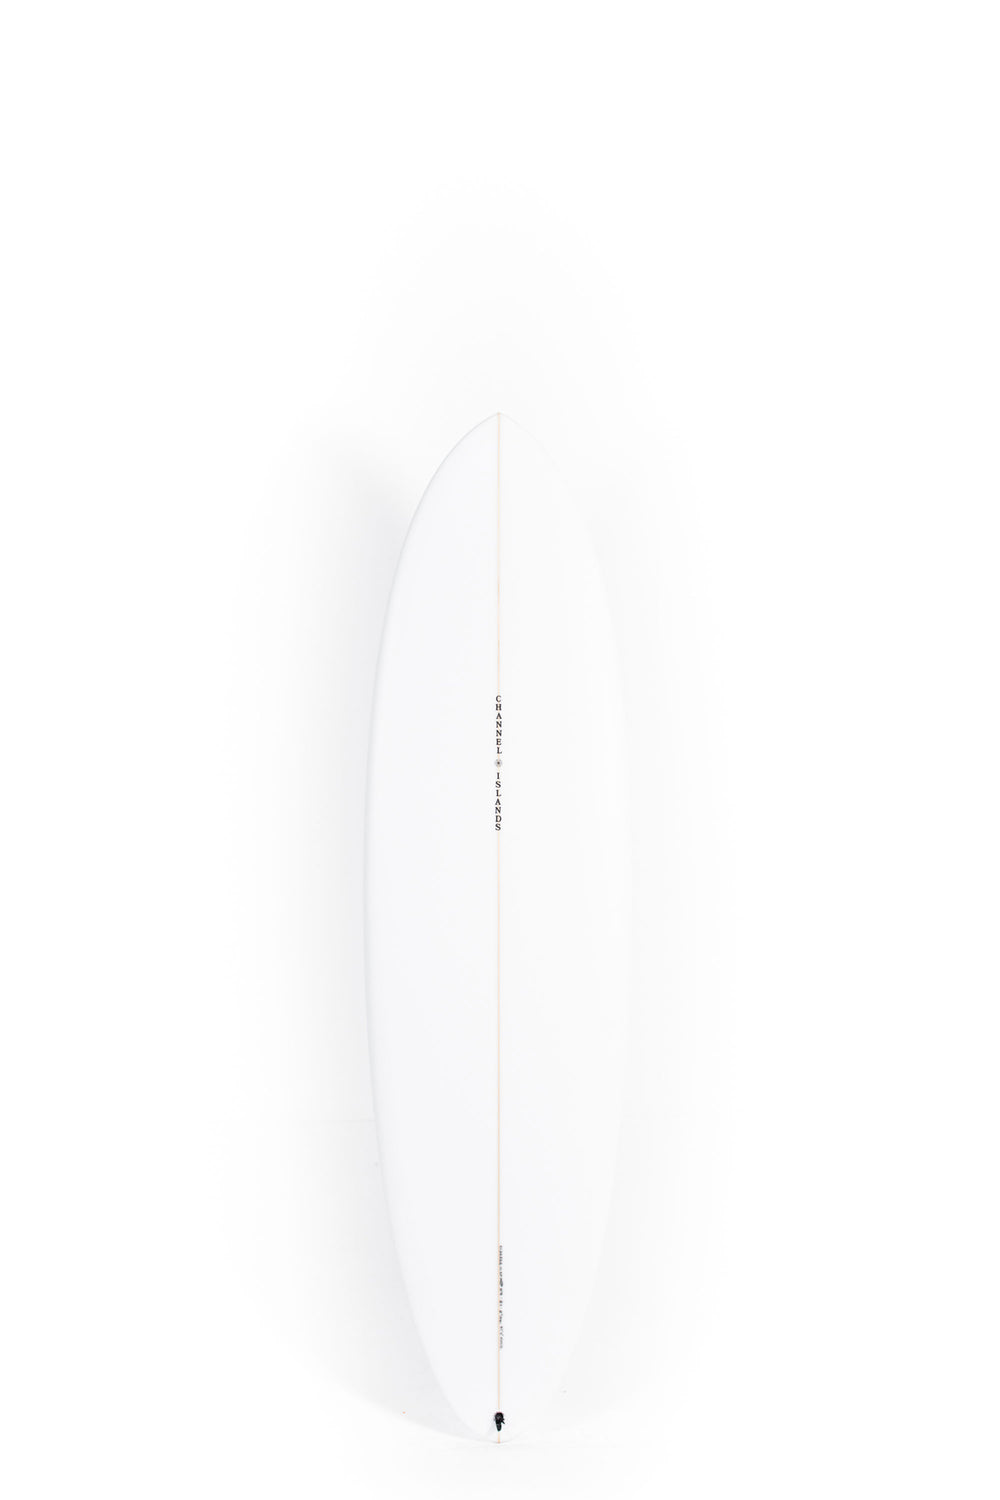 Pukas-Surf-Shop-Channel-Island-Surfboards-CI-Mid-Twin-Al-Merrick-6_8_-CI32282